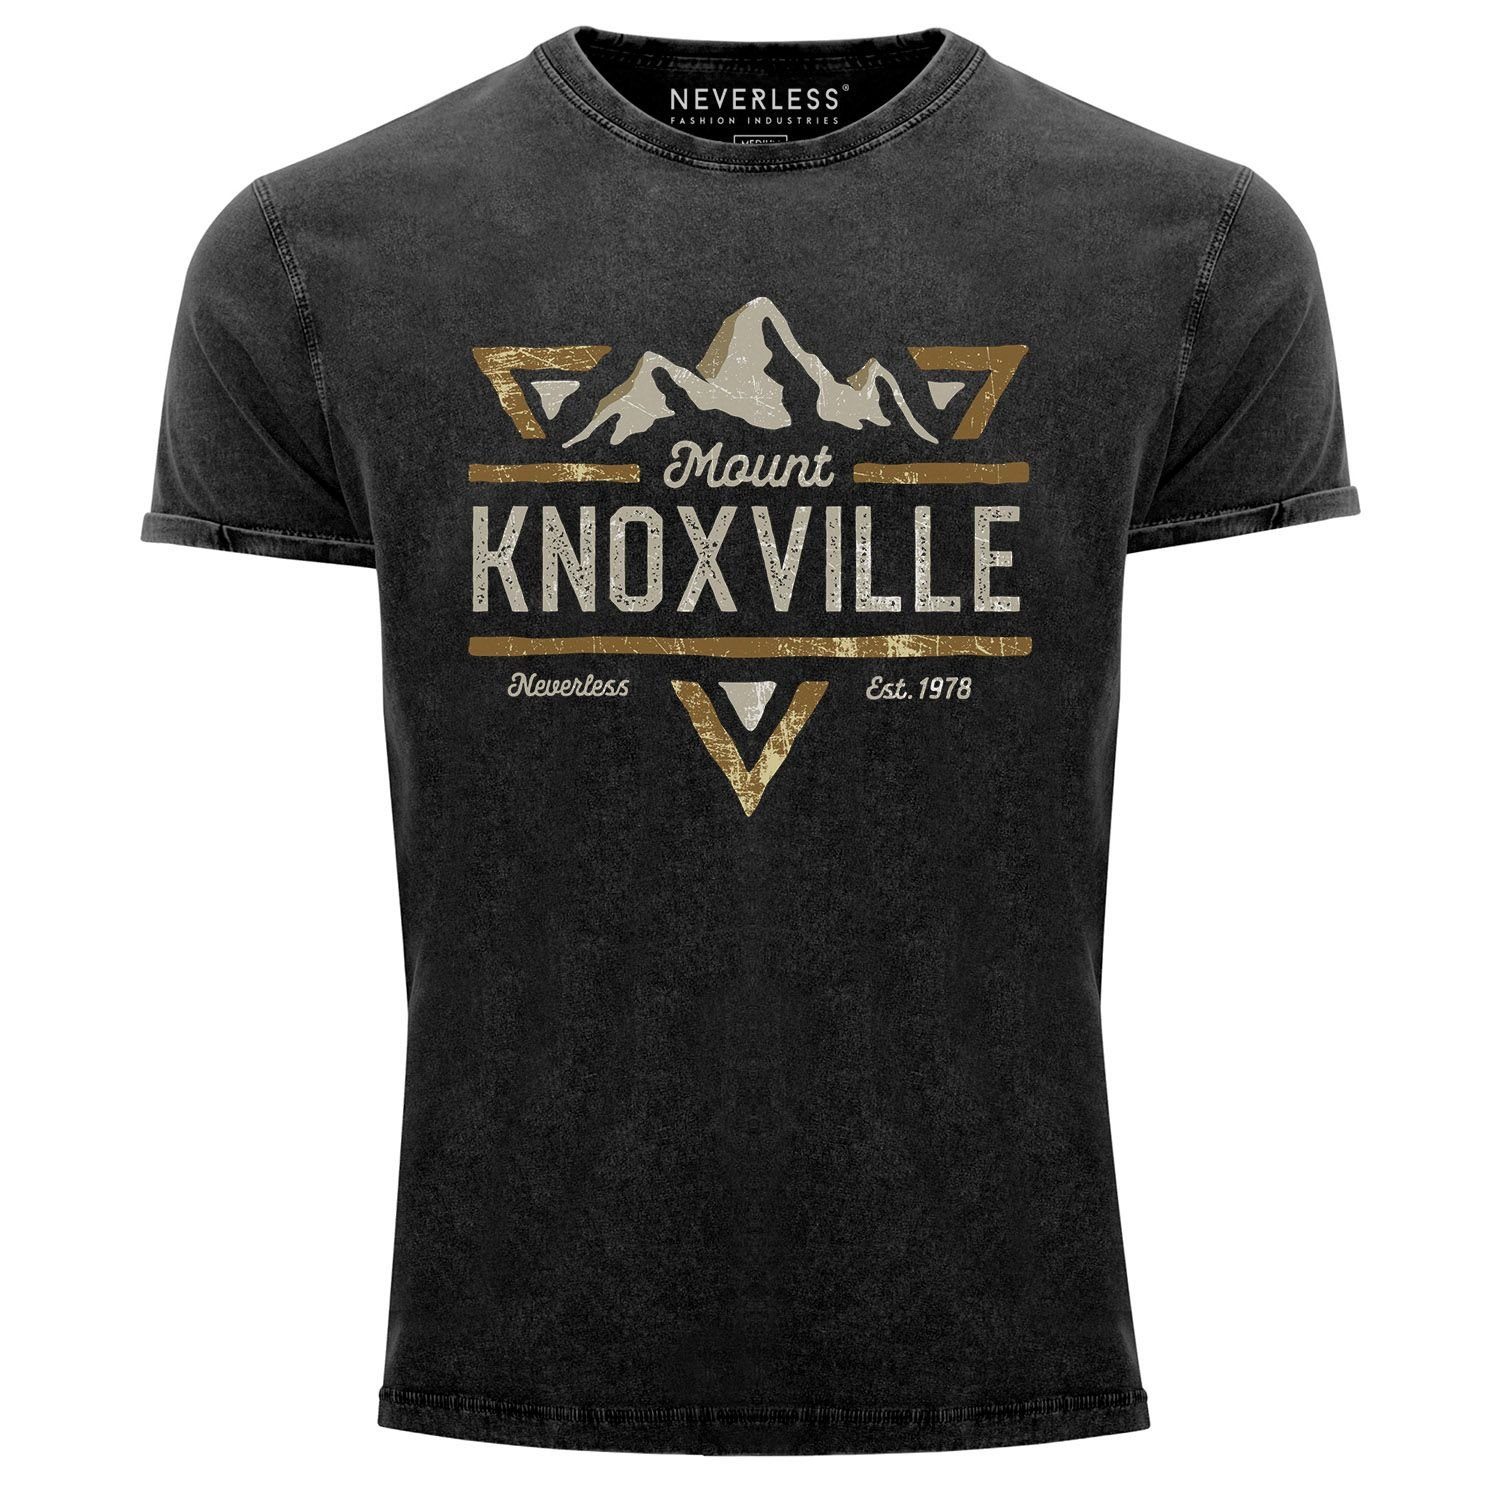 Neverless Print-Shirt Neverless® Herren T-Shirt Vintage Shirt Printshirt Mountain Berge Adventure Emblem Retro Design Mount Knoxville Fashion Streetstyle Aufdruck Used Look Slim Fit mit Print